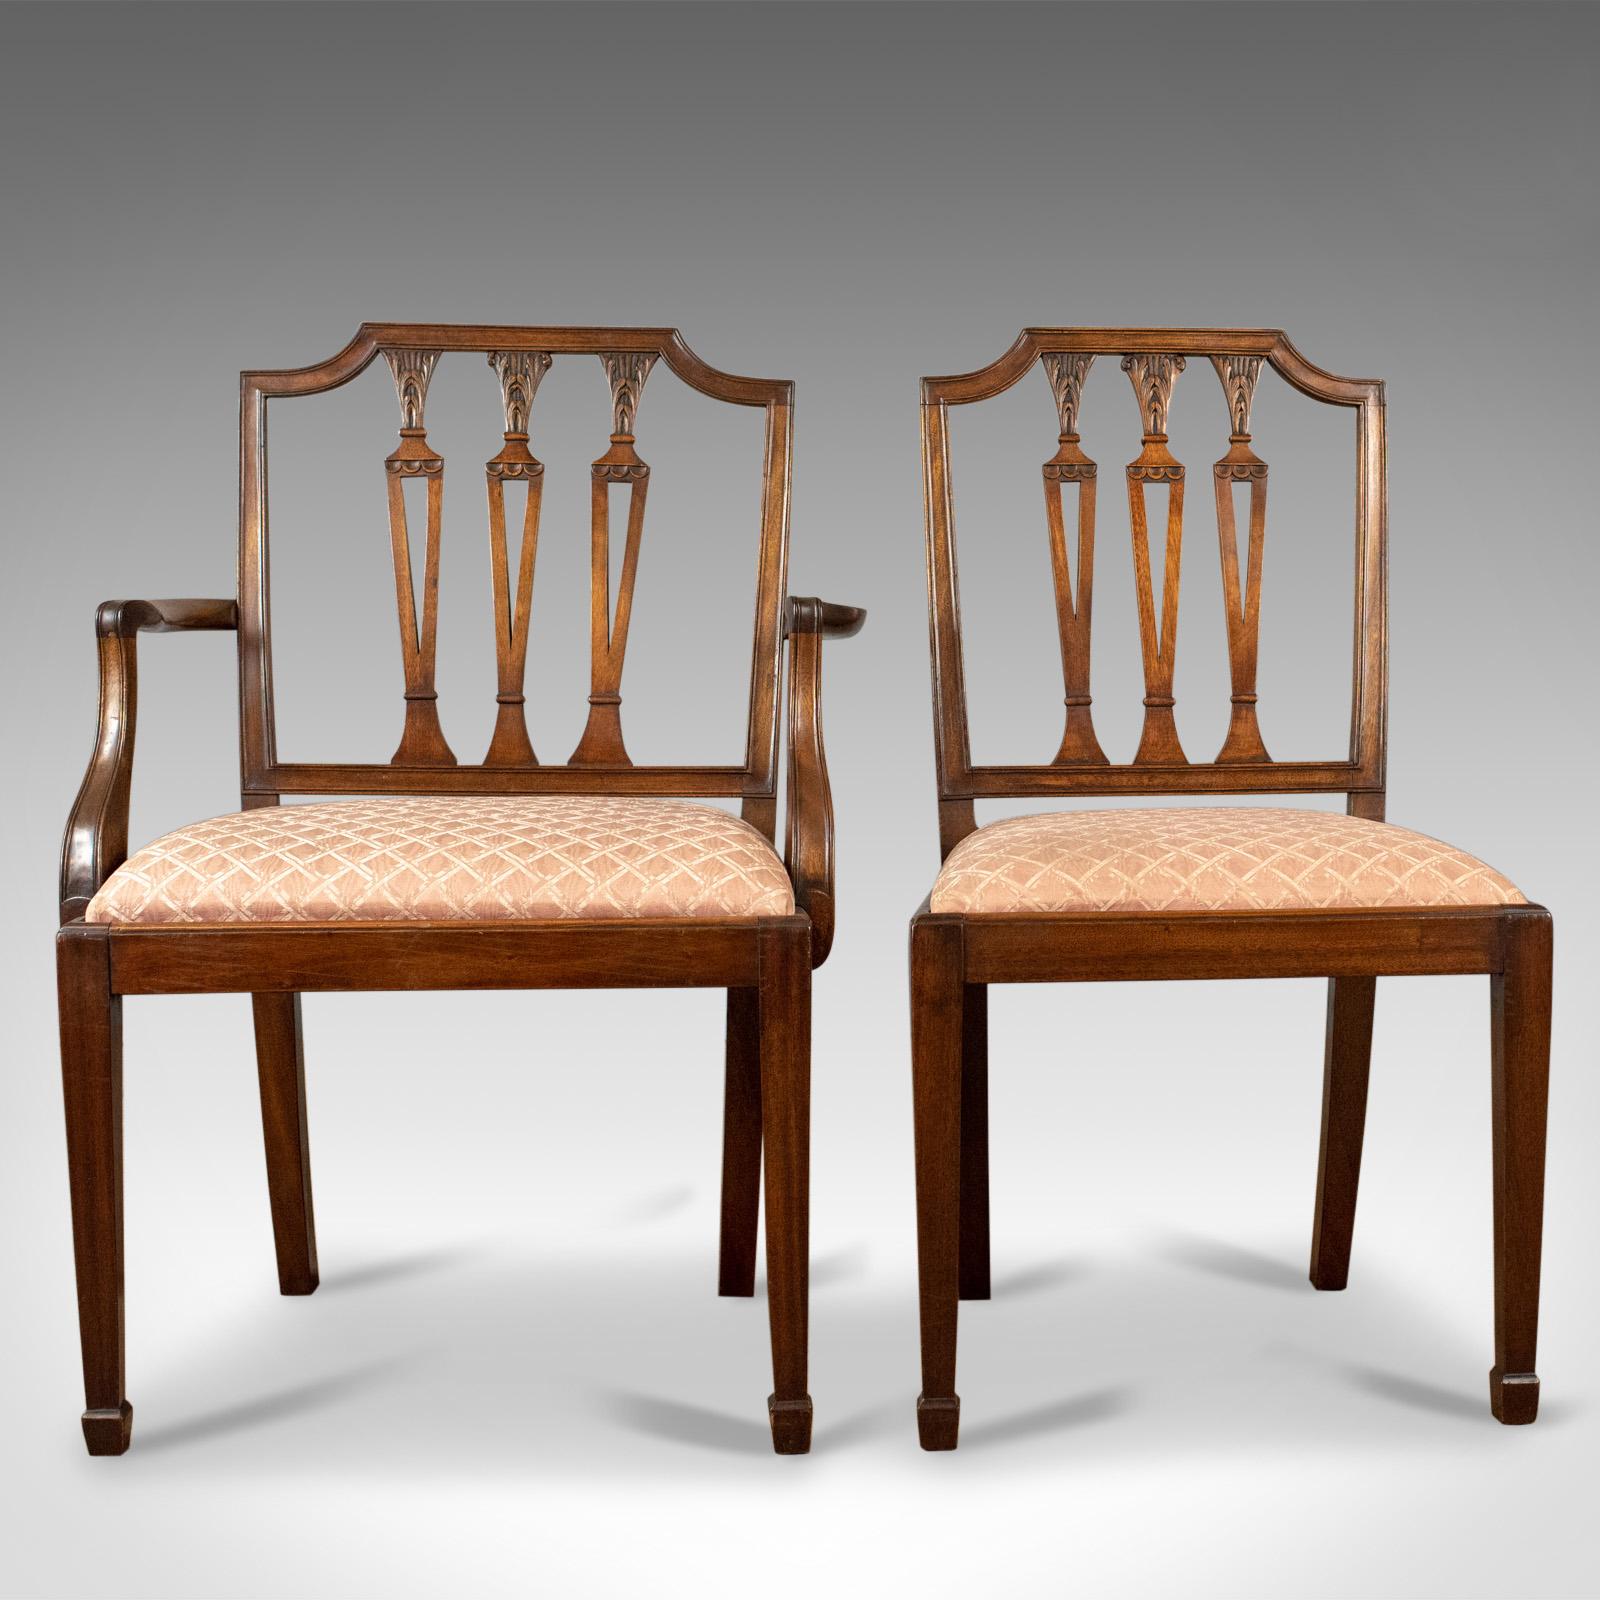 English Set of Six Antique Dining Chairs, Mahogany, Victorian, Sheraton Revival